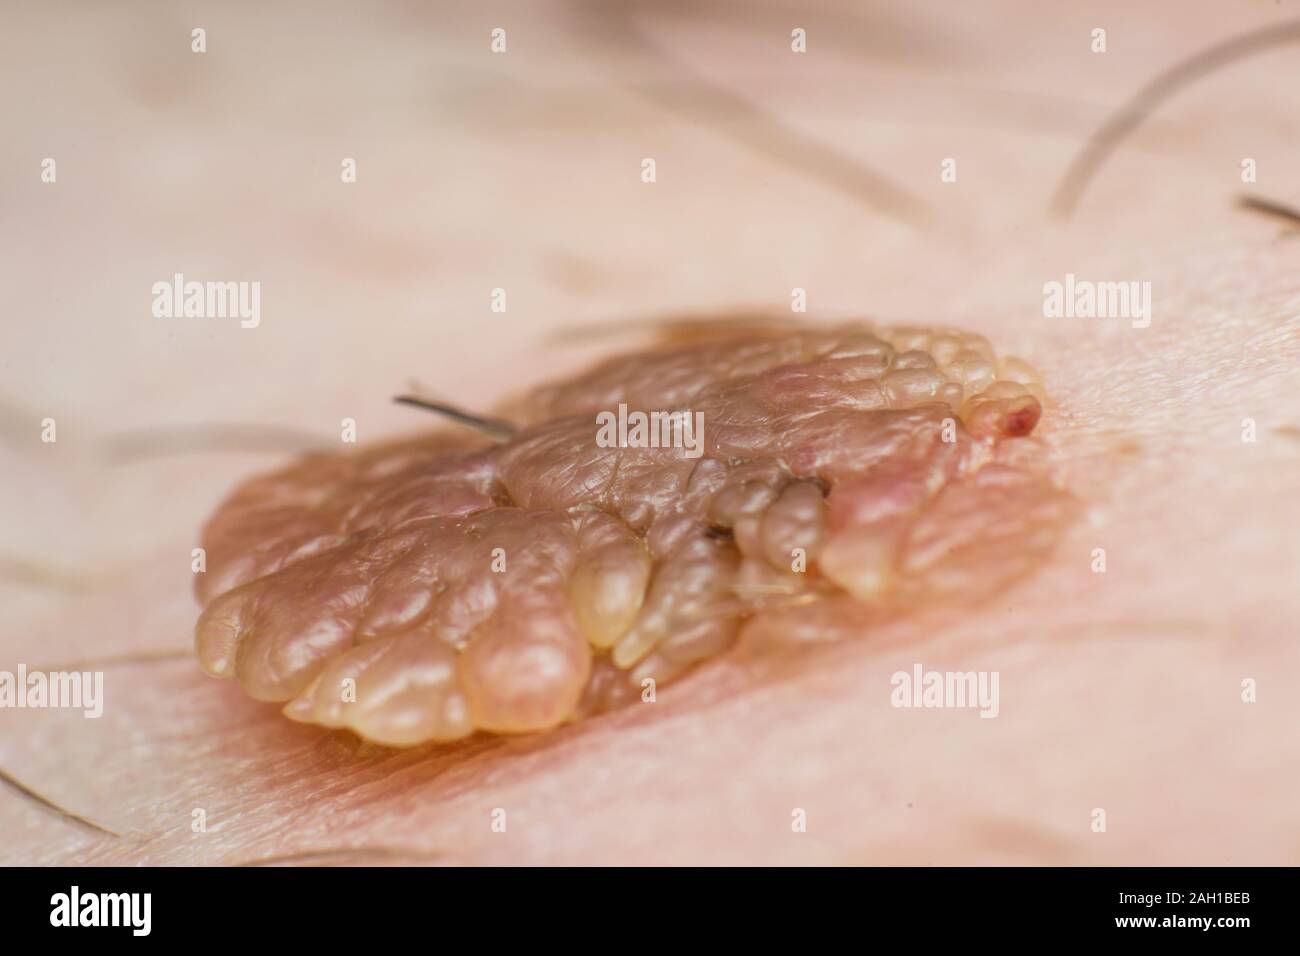 Macro photo of a skin wart, papilloma virus infection Stock Photo